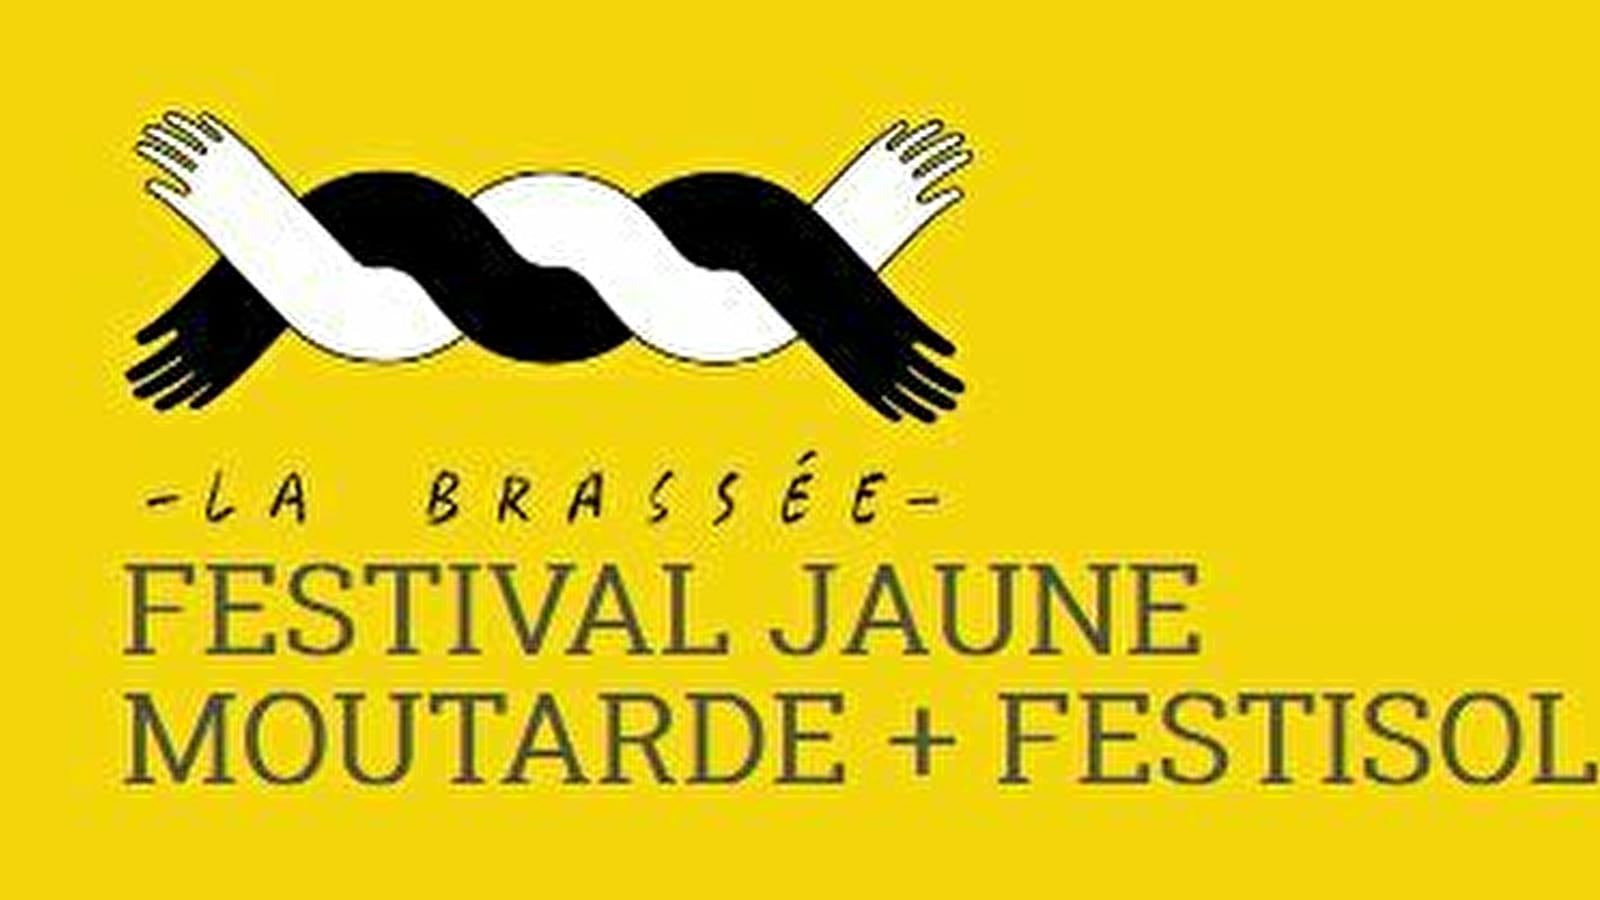 Festival Jaune Moutarde + Festisol